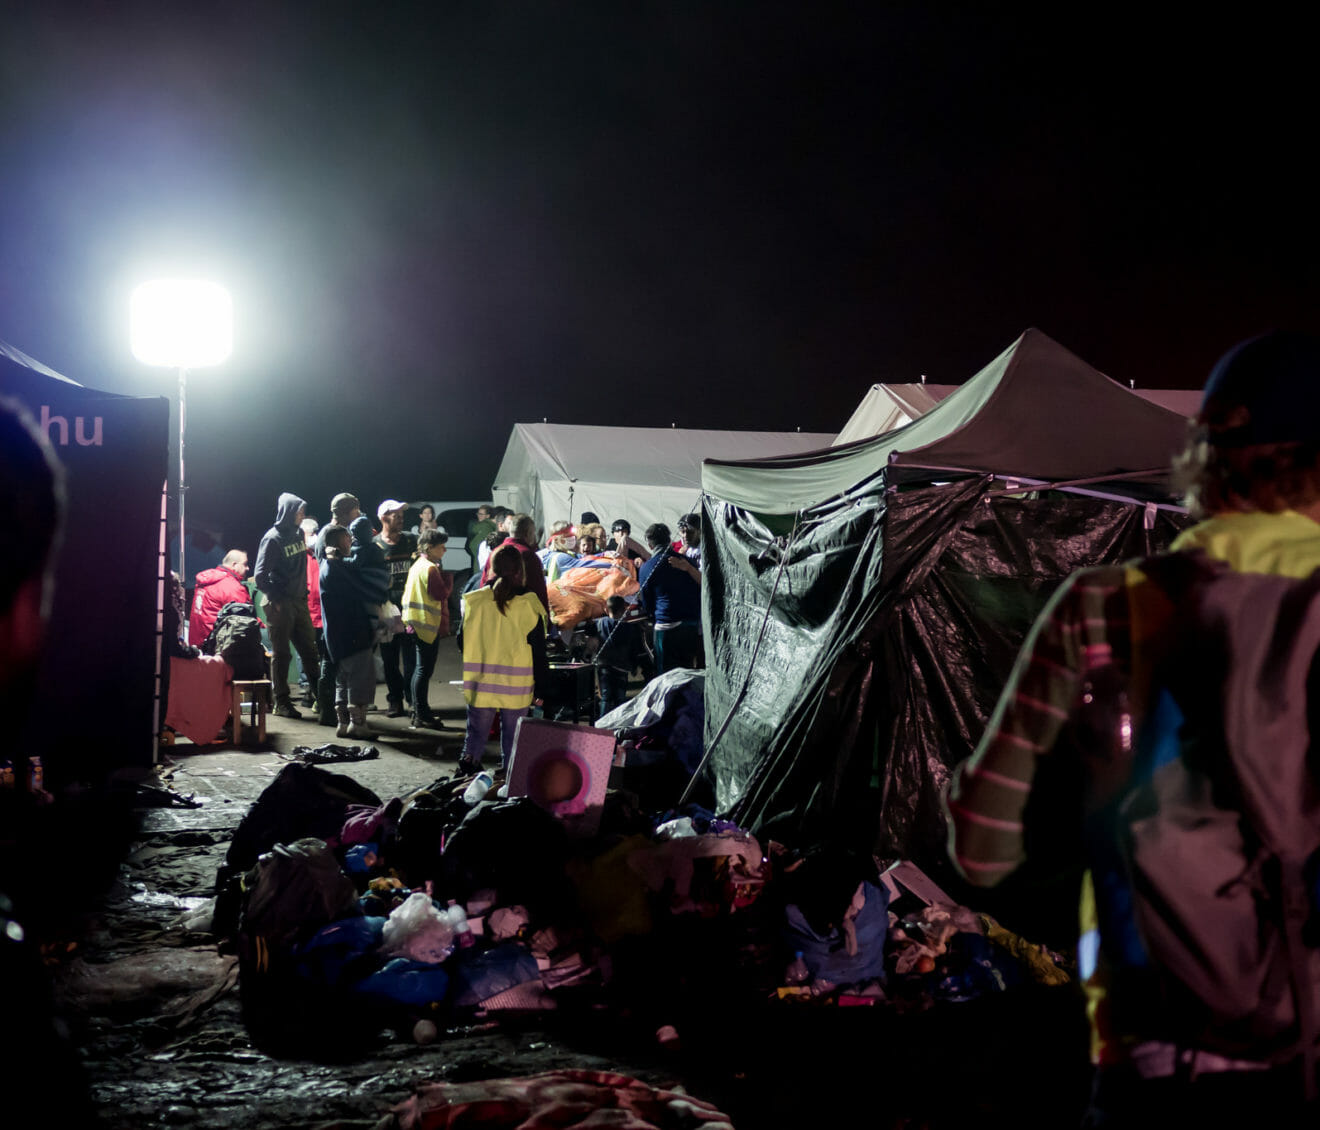 PHOTO ESSAY - European Refugee Crisis